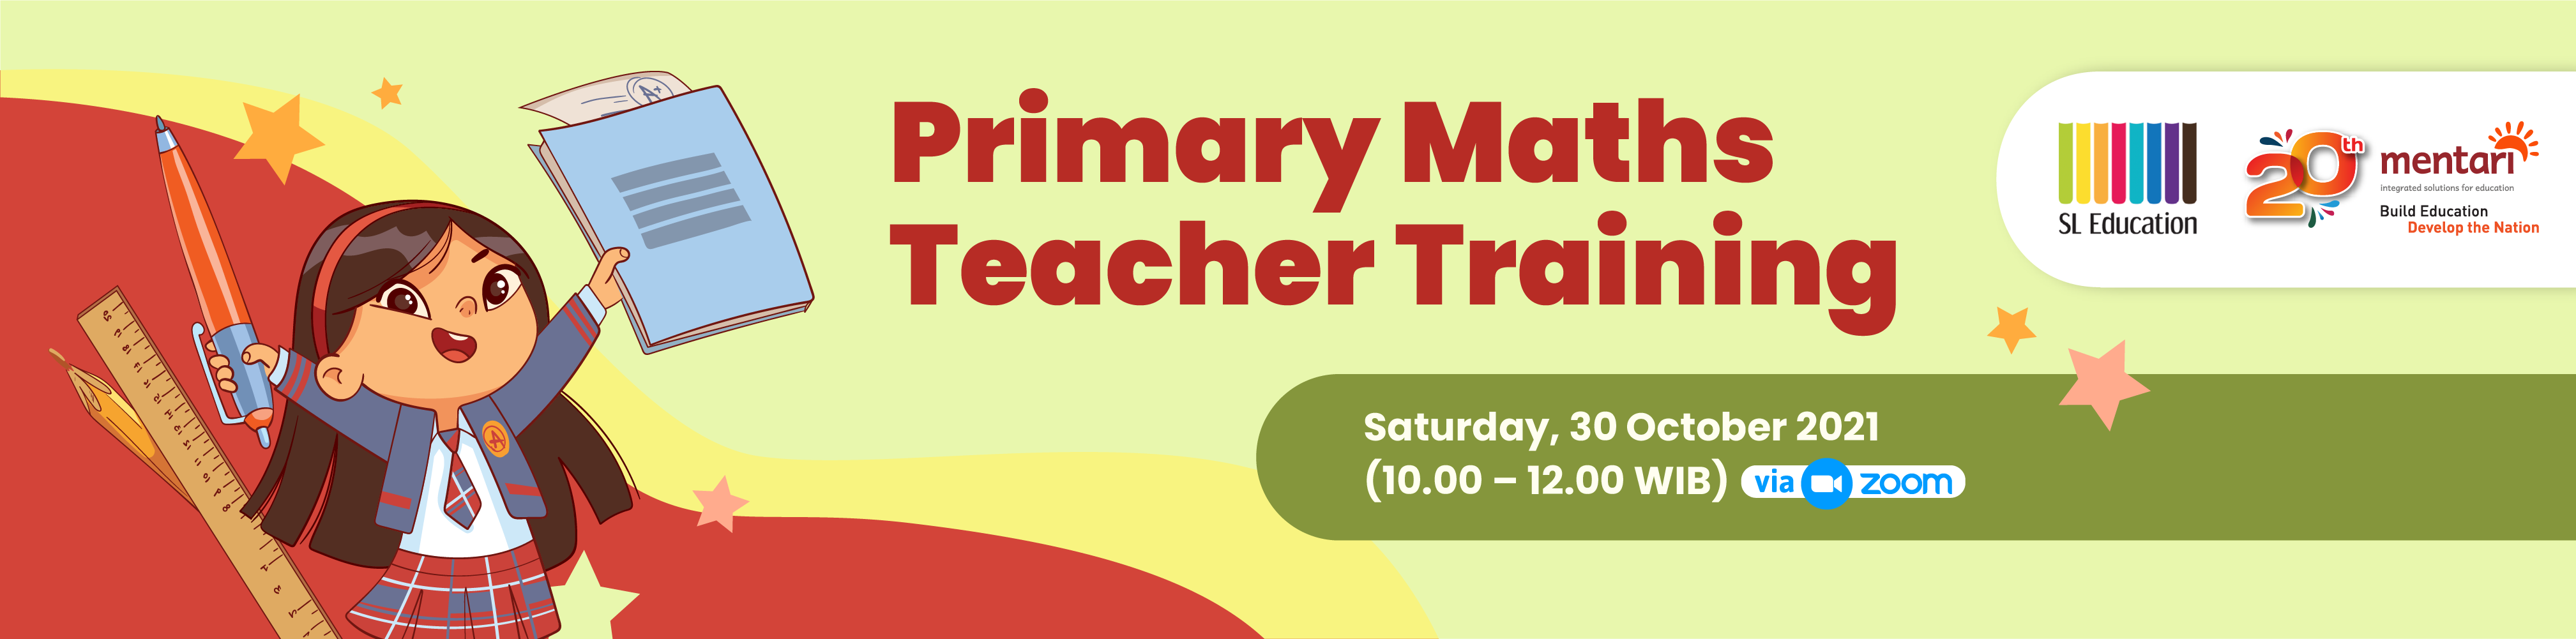 Primary Maths Teacher Training